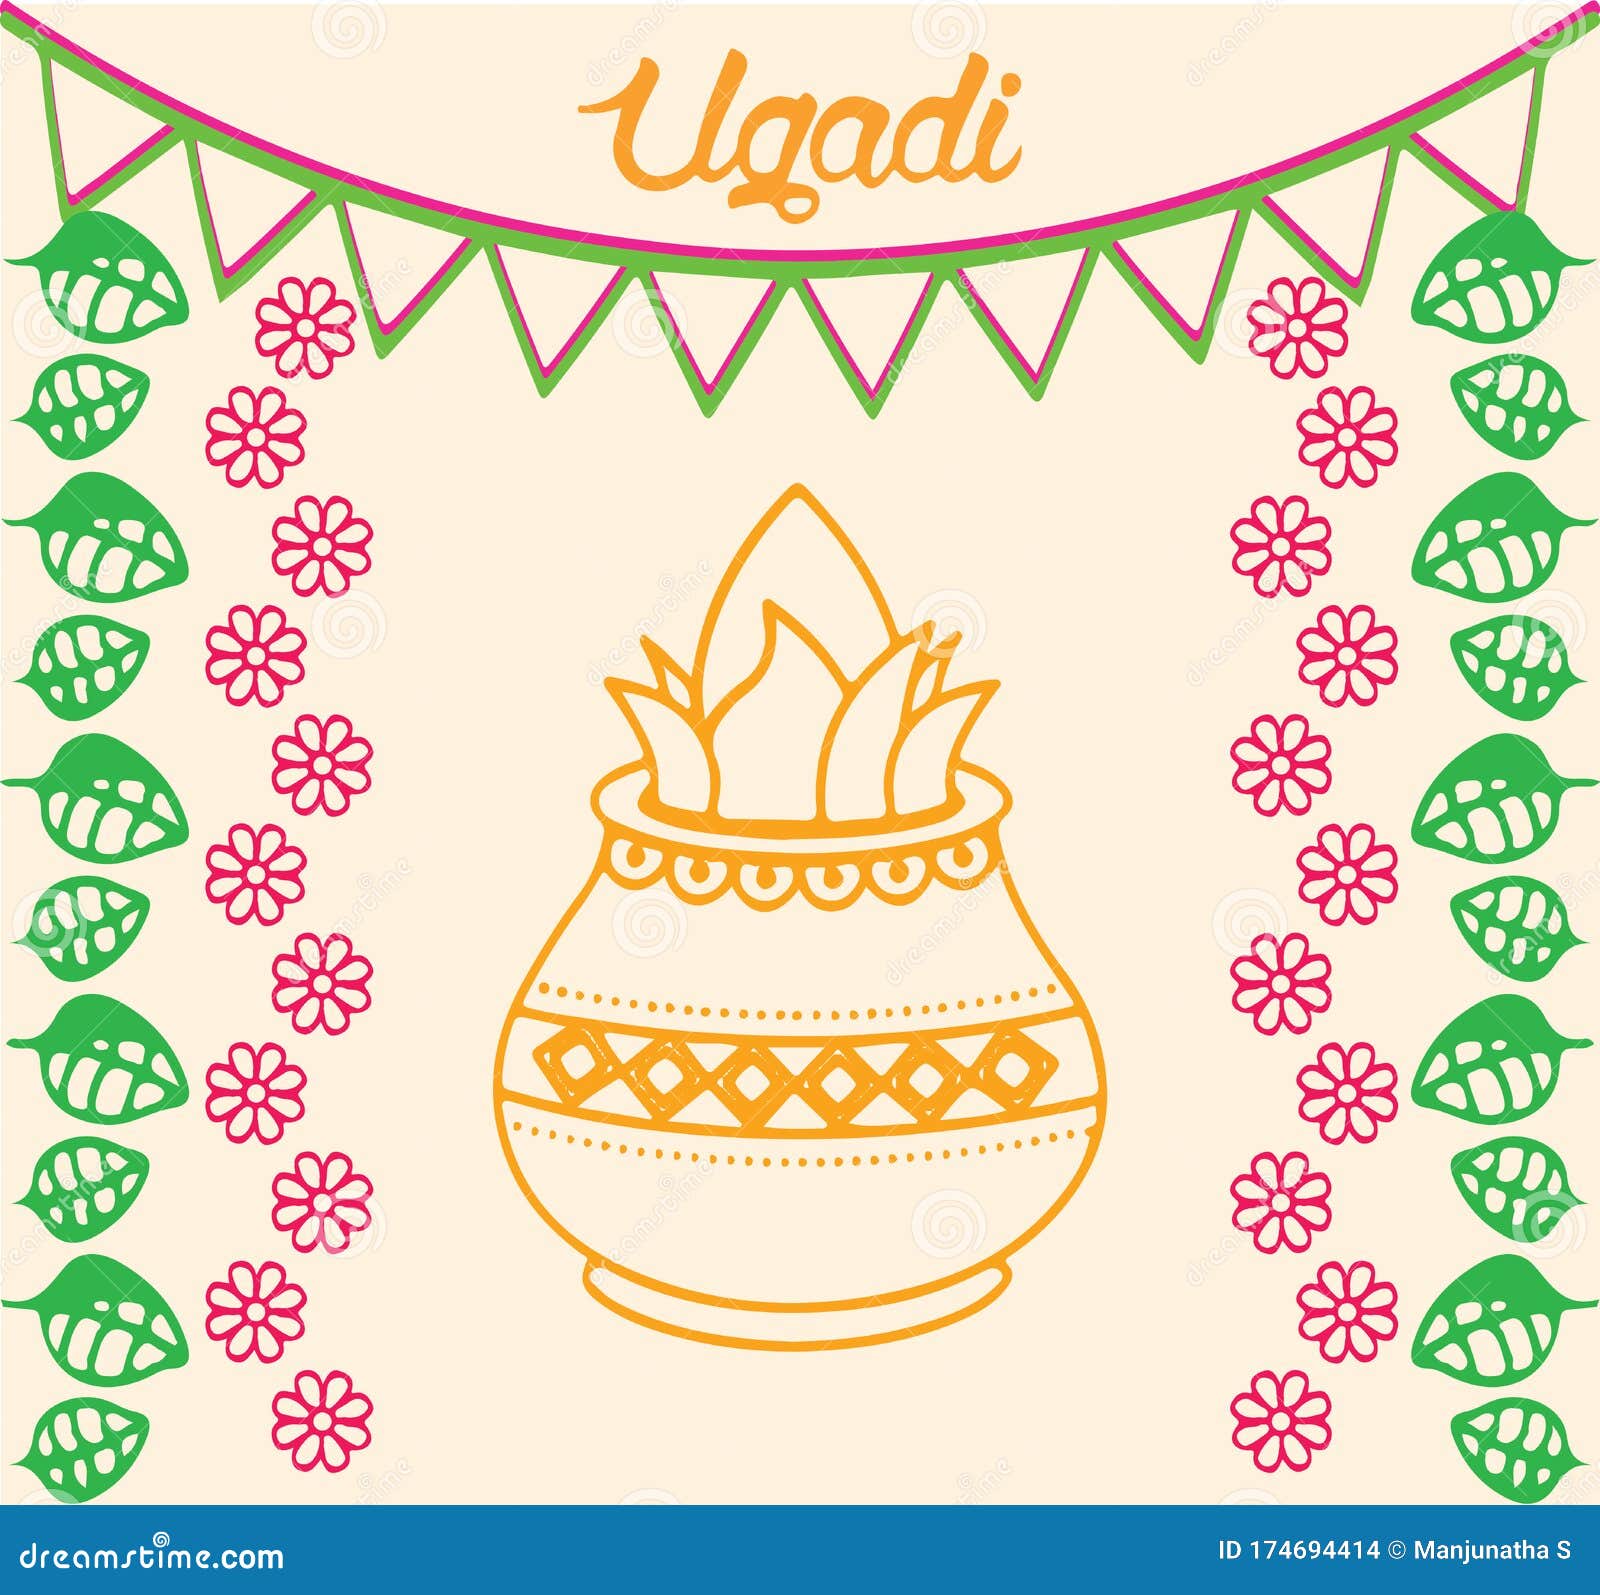 Ugadi Muggulu Designs 2020: Easy Rangoli Patterns for Ugadi (Gudi Padwa) to  Celebrate Telugu New Year (Watch Videos) | 🙏🏻 LatestLY